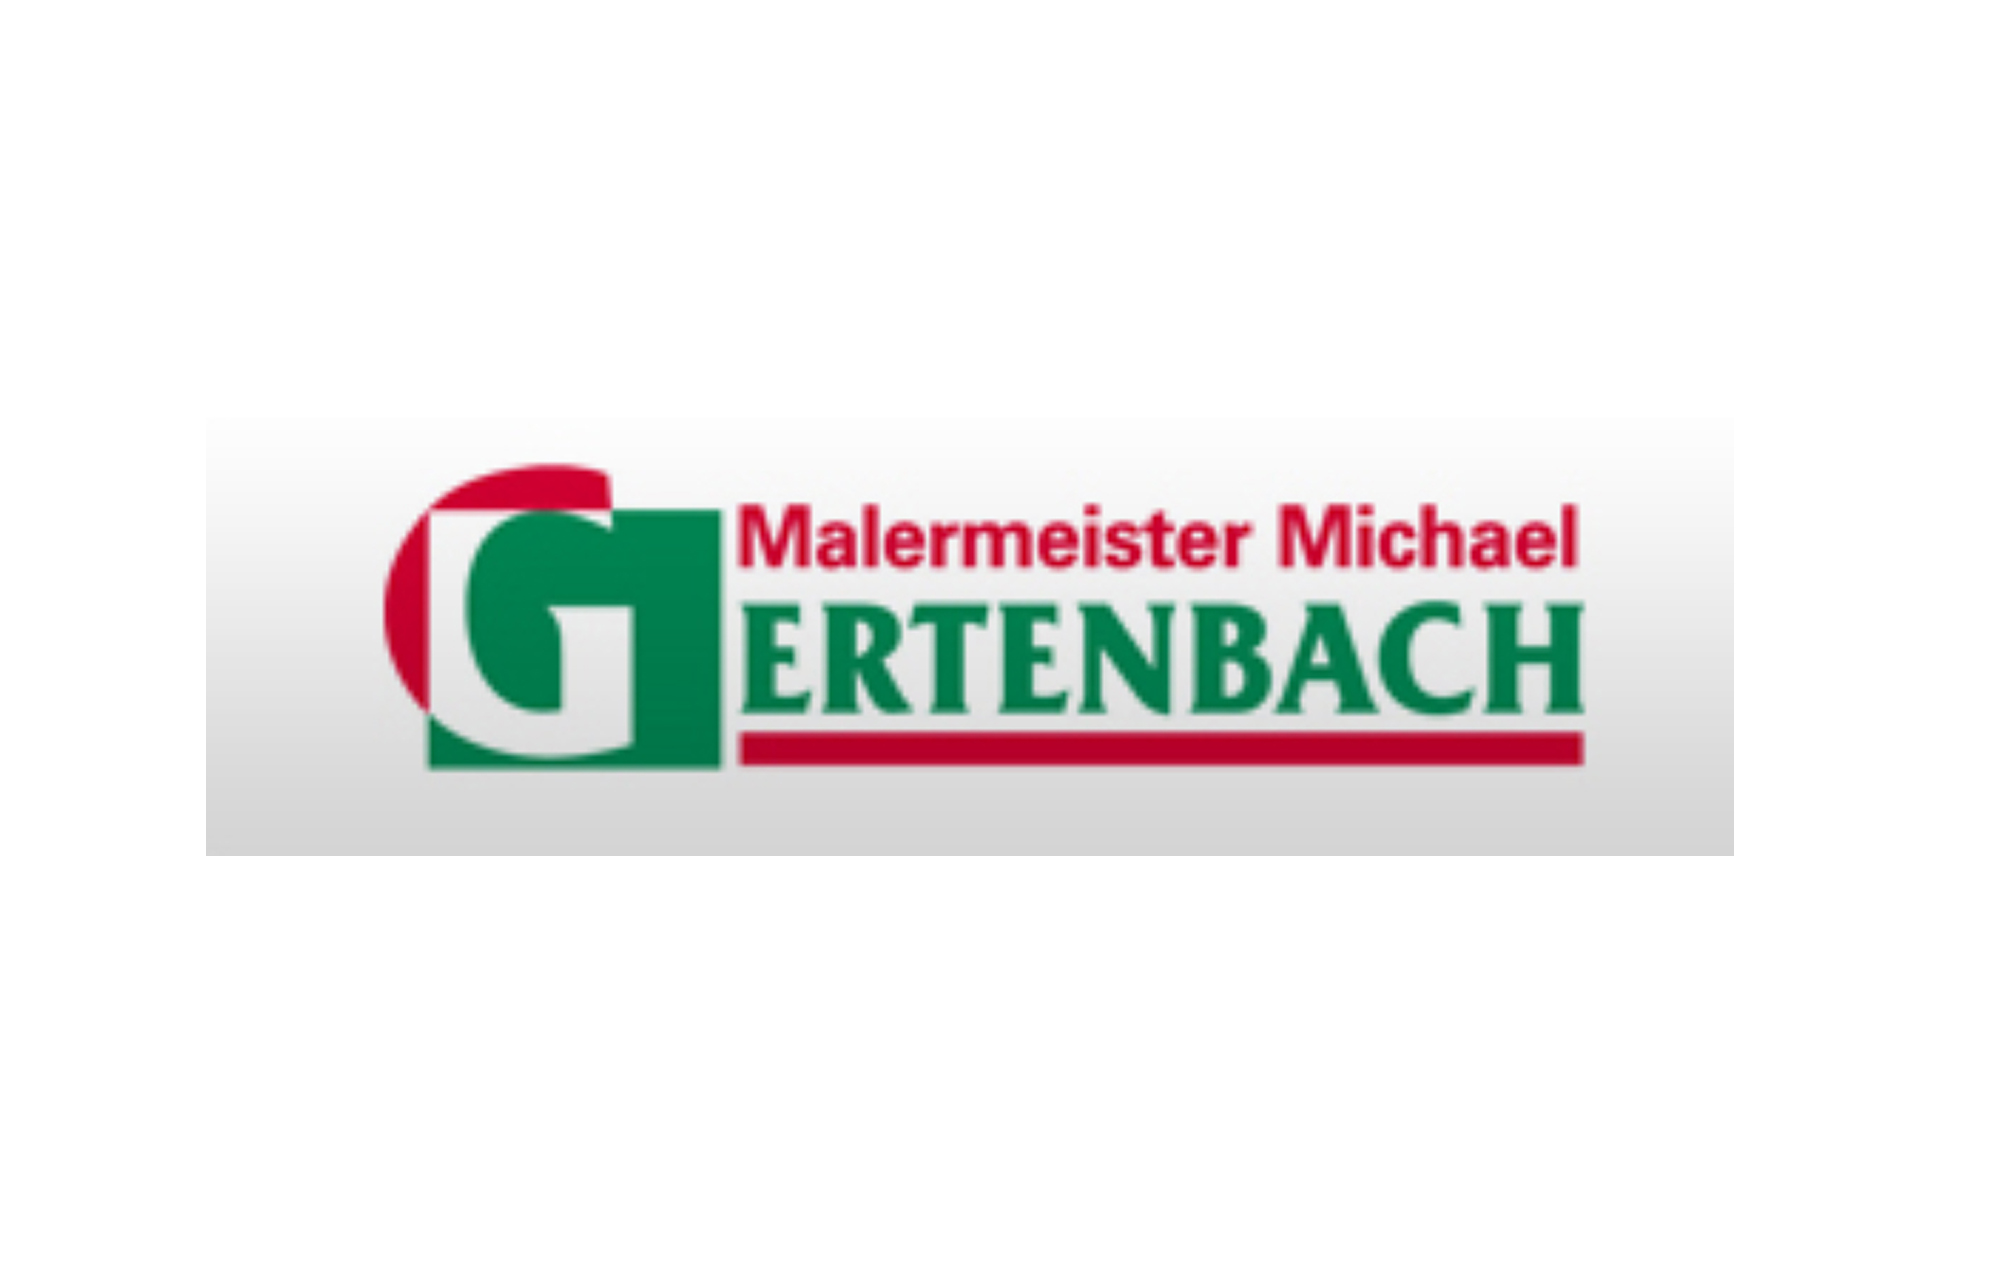 Malermeister M. Gertenbach